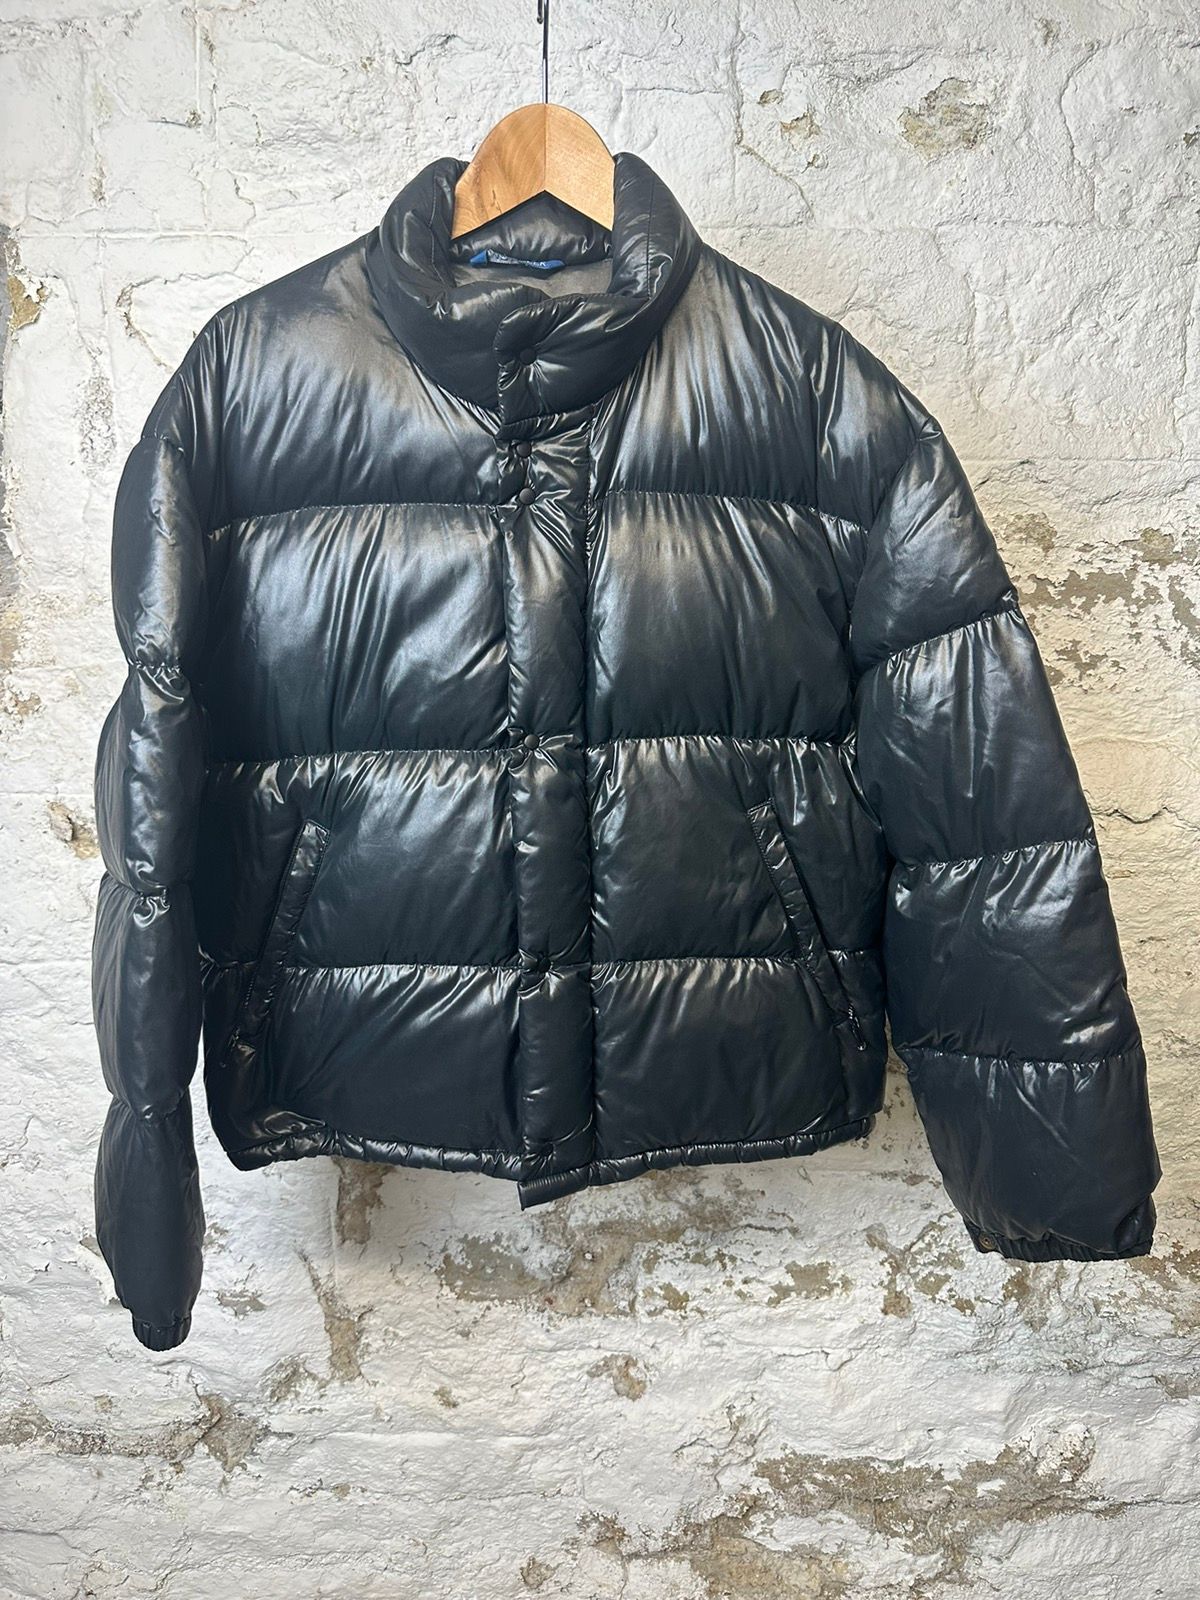 Pre-owned Moncler Grenoble Black Puffer Jacket Coat Size 2